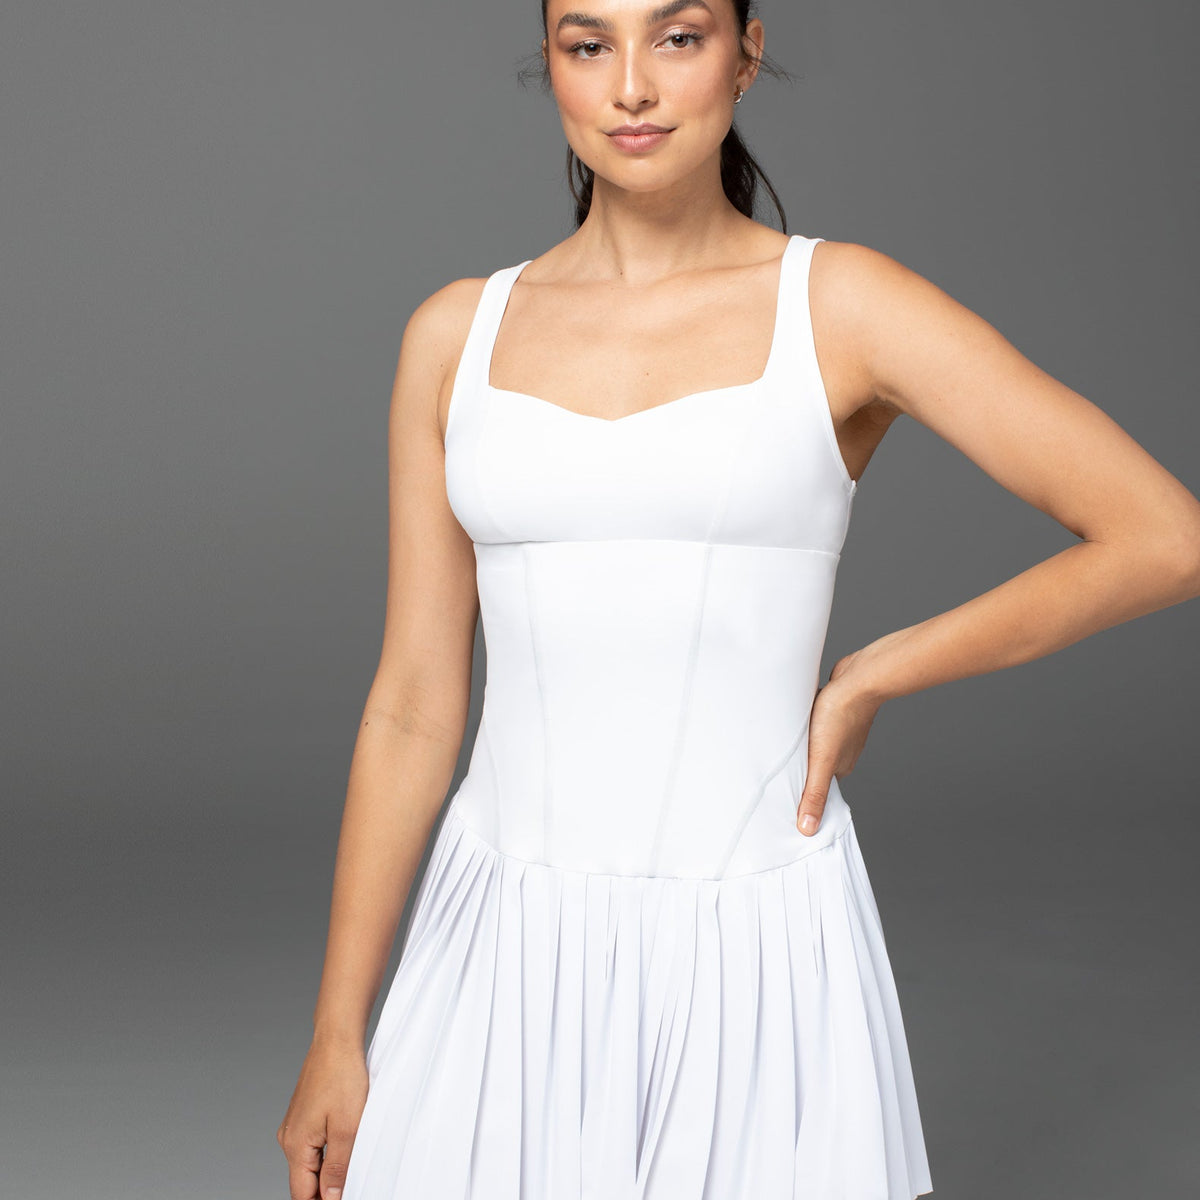 lululemon tennis dress